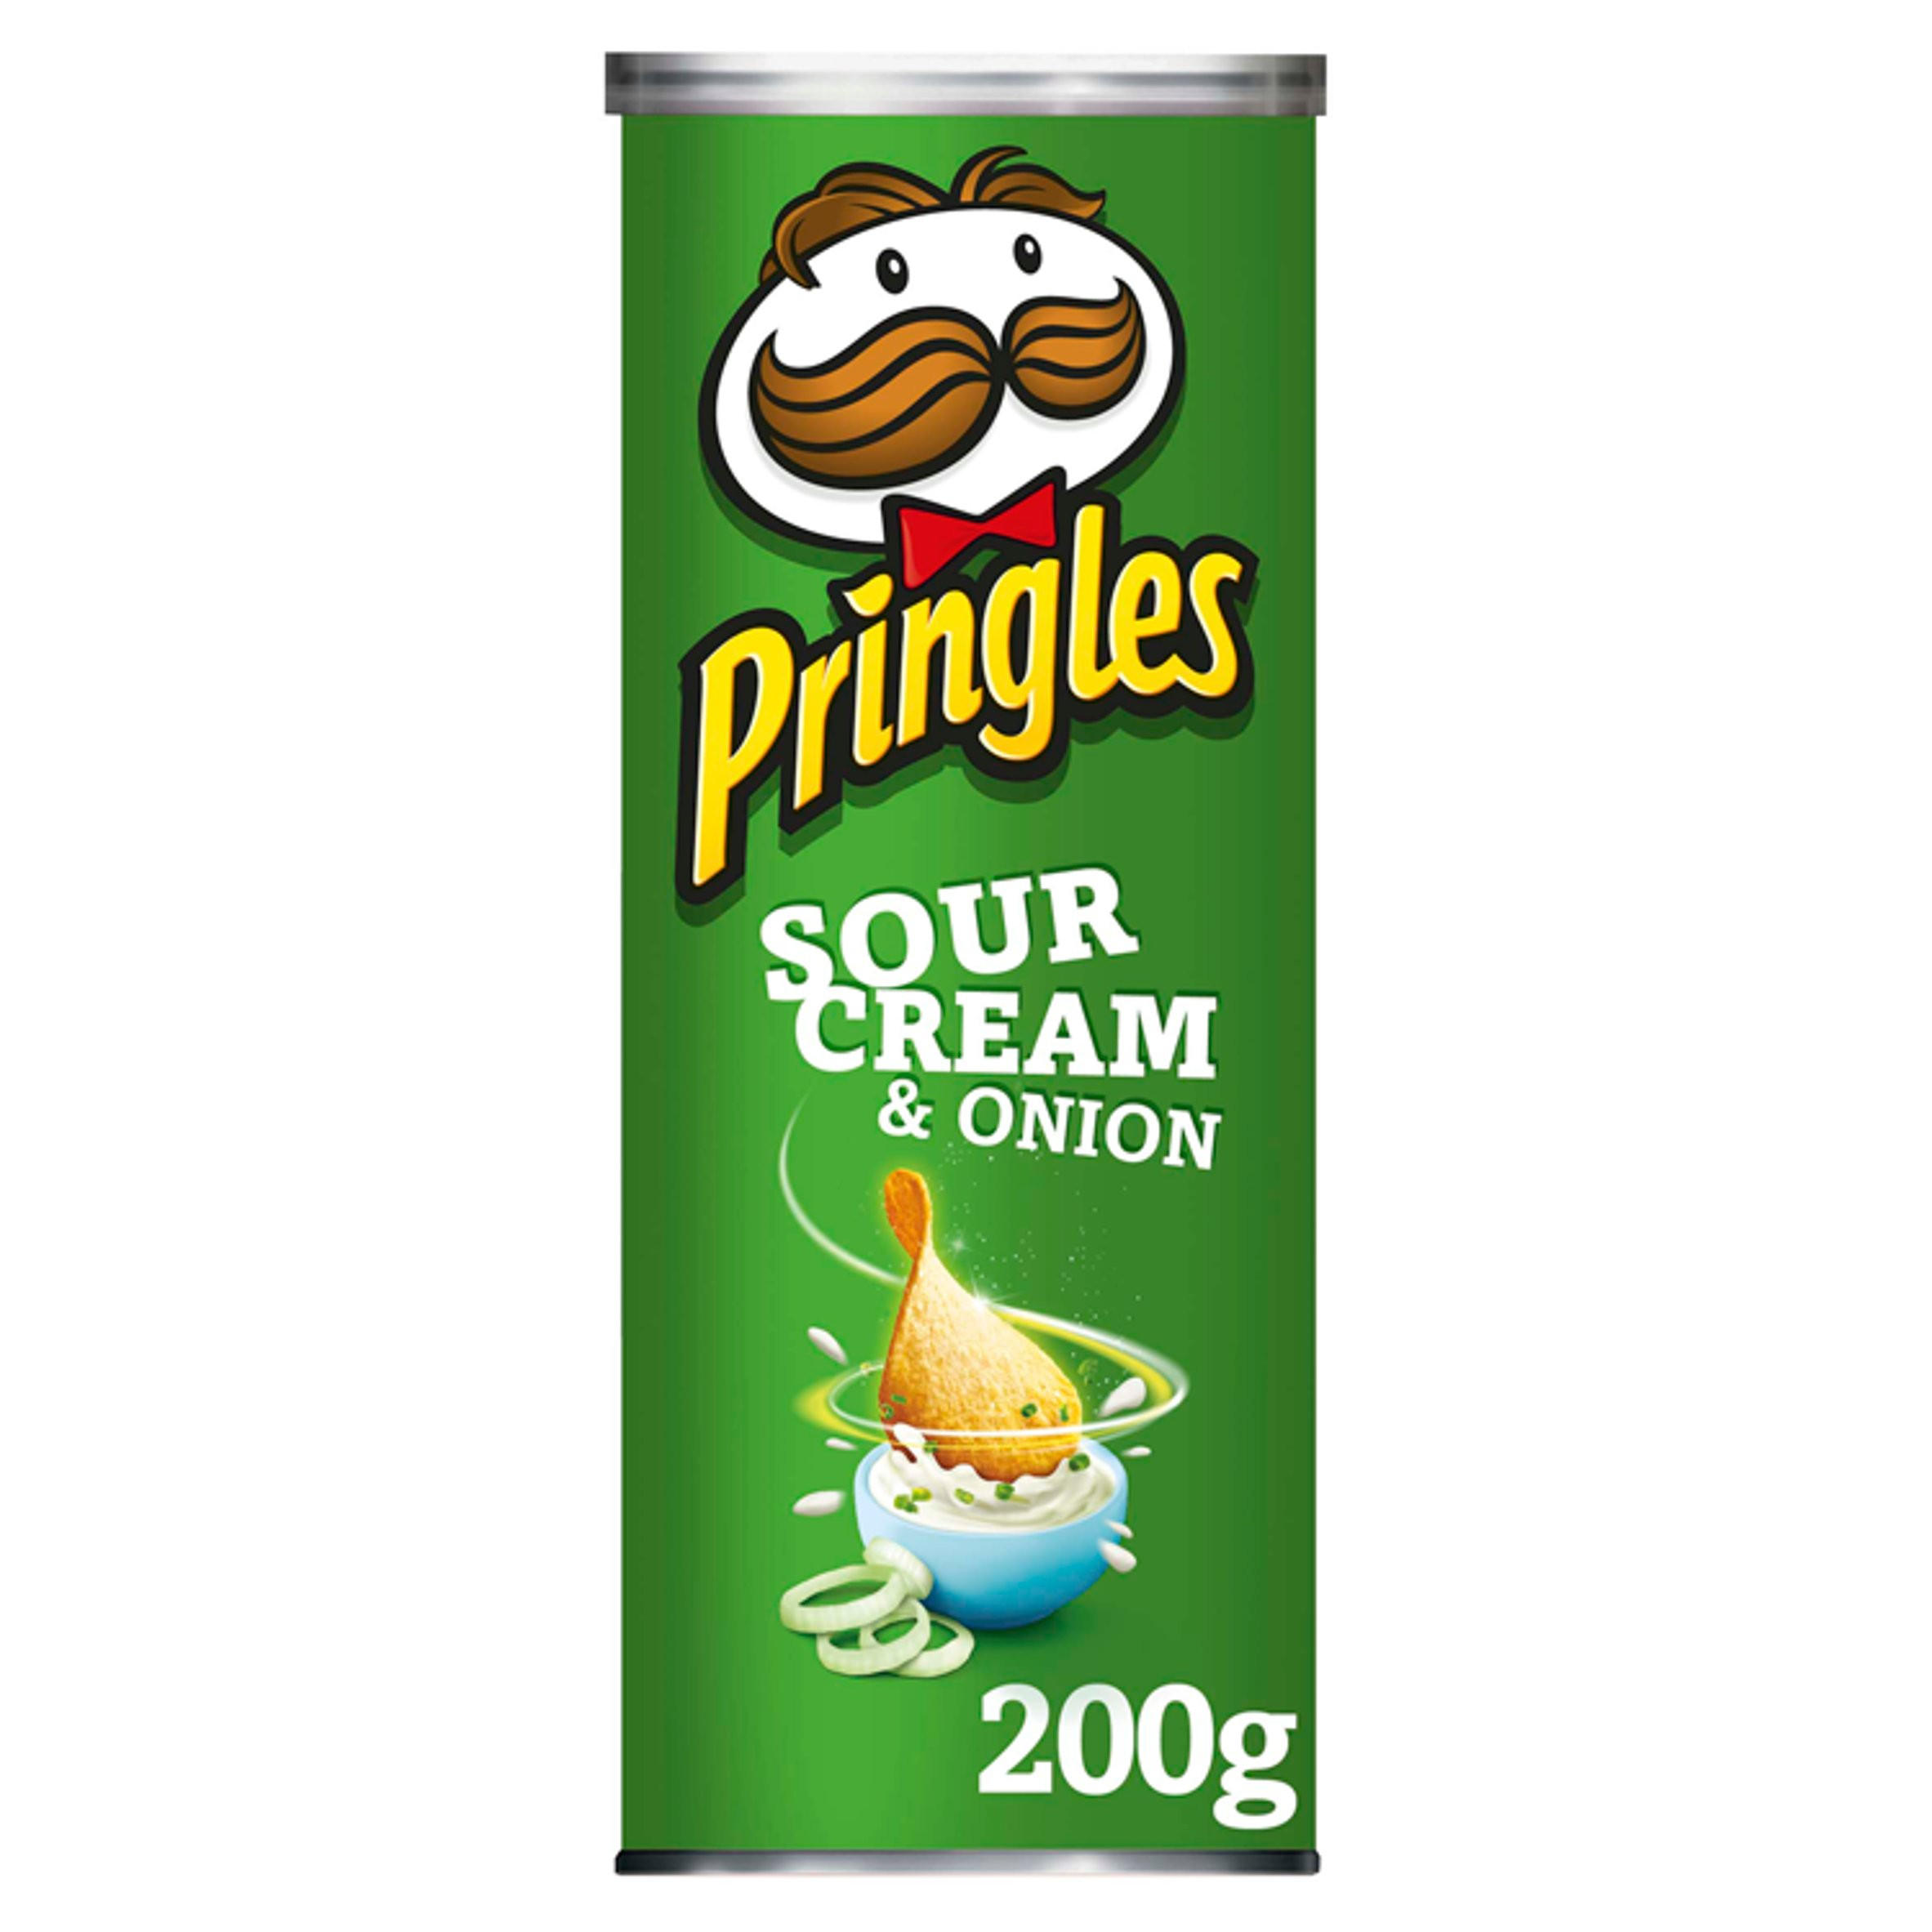 Pringles Sour Cream & Onion Crisps, 200g | Sharing Crisps | Iceland Foods